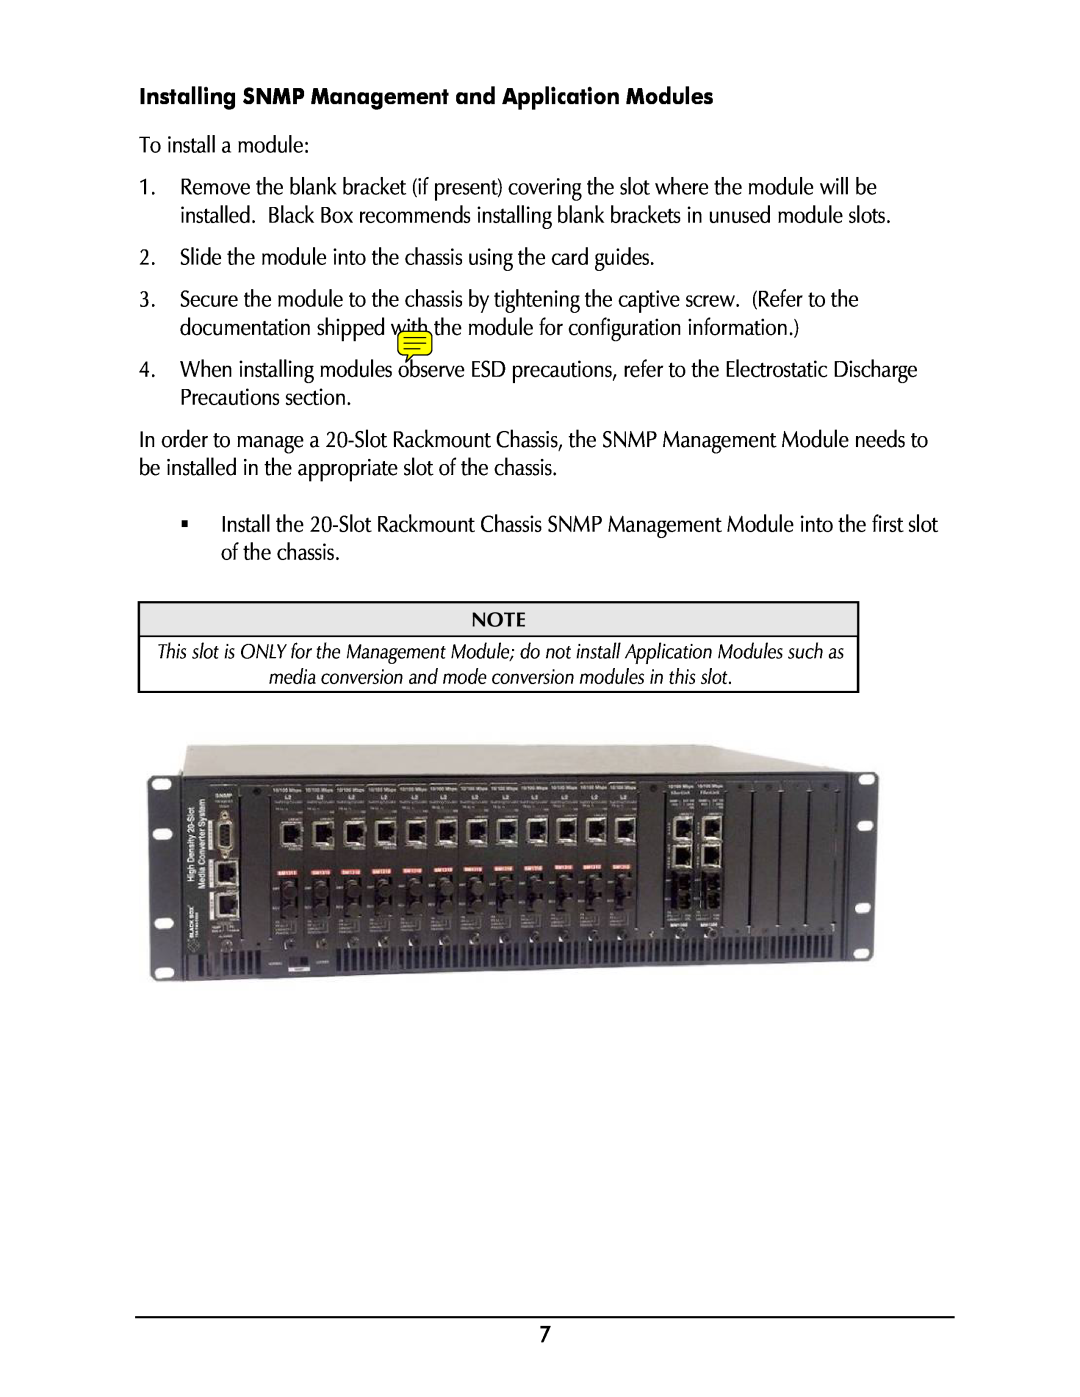 Black Box Black Box High-Density Media Converter System II, LMC5208A-R2 Installing SNMP Management and Application Modules 